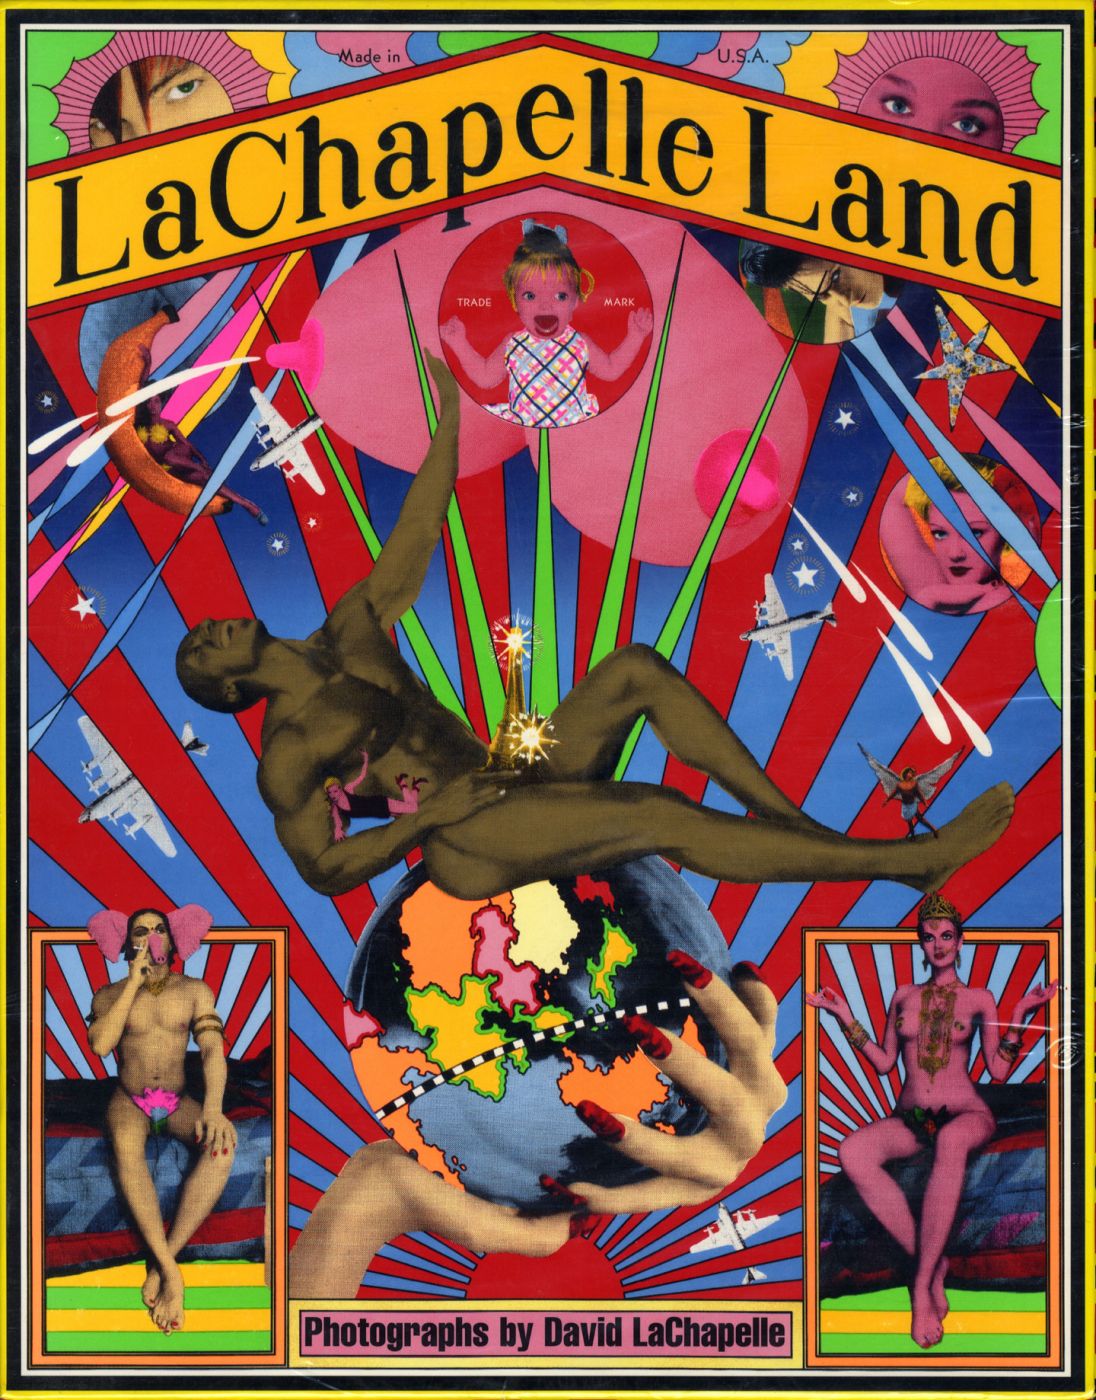 LaChapelle Land: Photographs by David